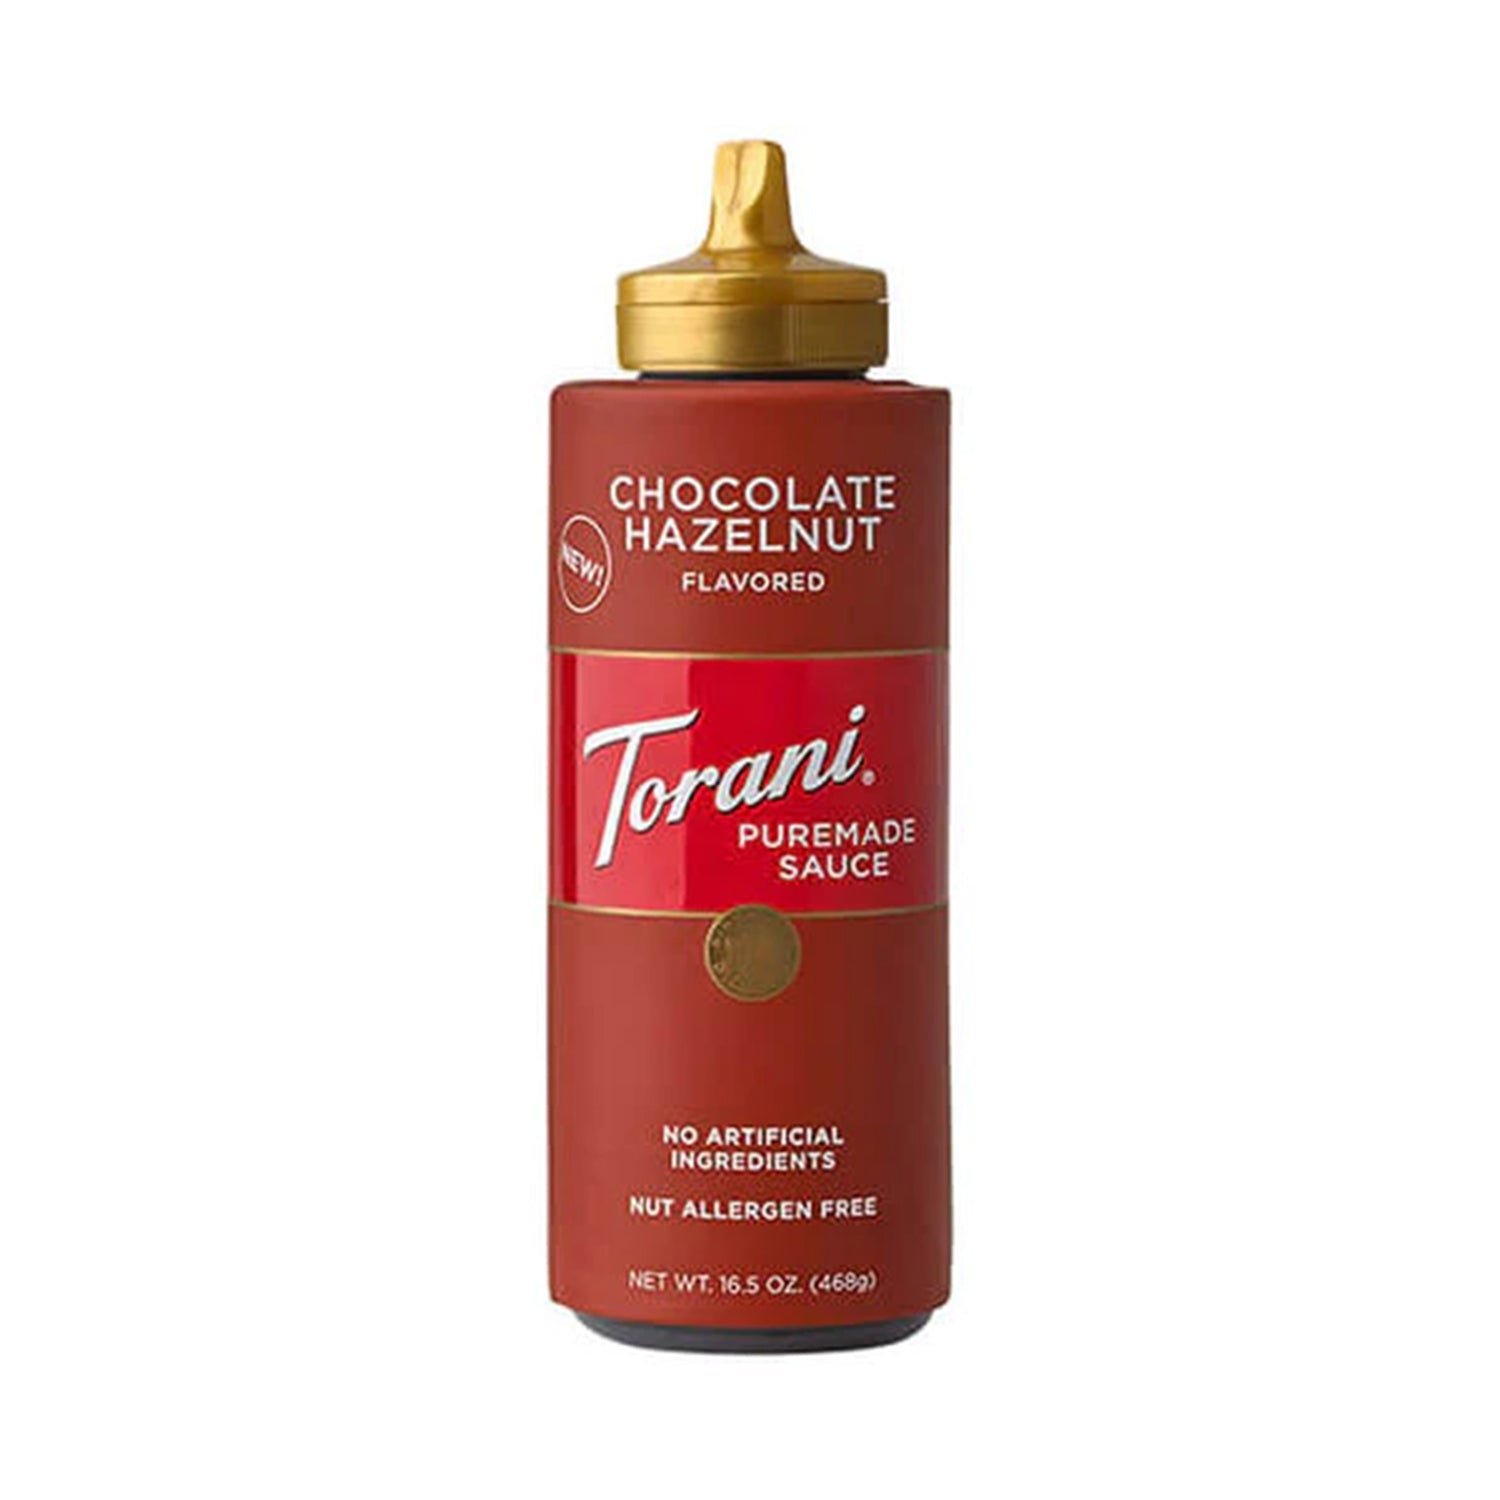 Torani Chocolate Hazelnut Puremade Sauce Bottle (16.5oz)